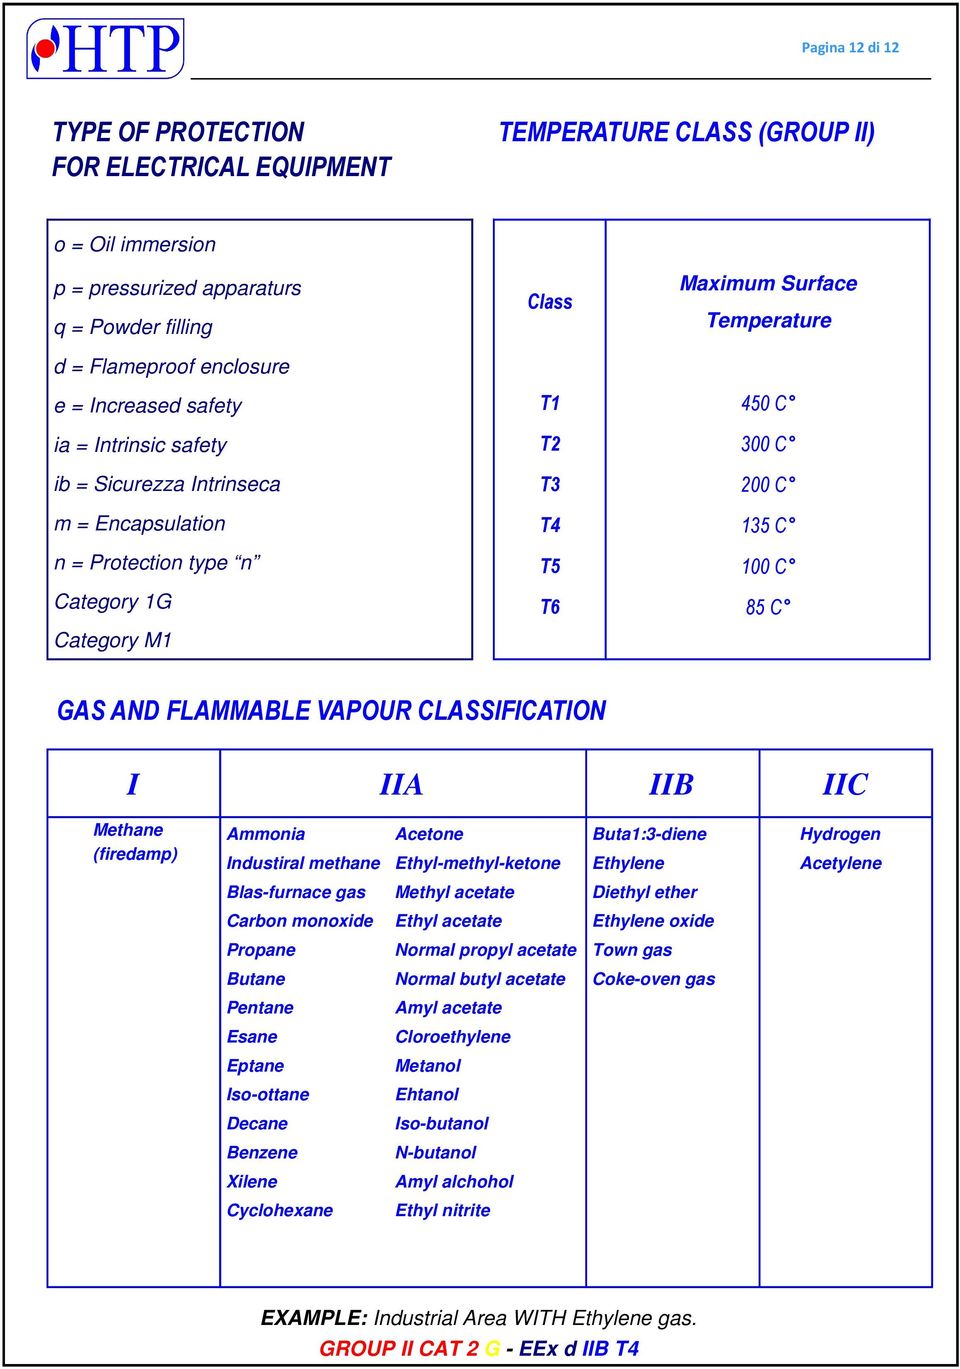 GAS AND FLAMMABLE VAPOUR CLASSIFICATION I IIA IIB IIC Methane (firedamp) Ammonia Industiral methane Acetone Ethyl-methyl-ketone Buta1:3-diene Ethylene Hydrogen Acetylene Blas-furnace gas Methyl